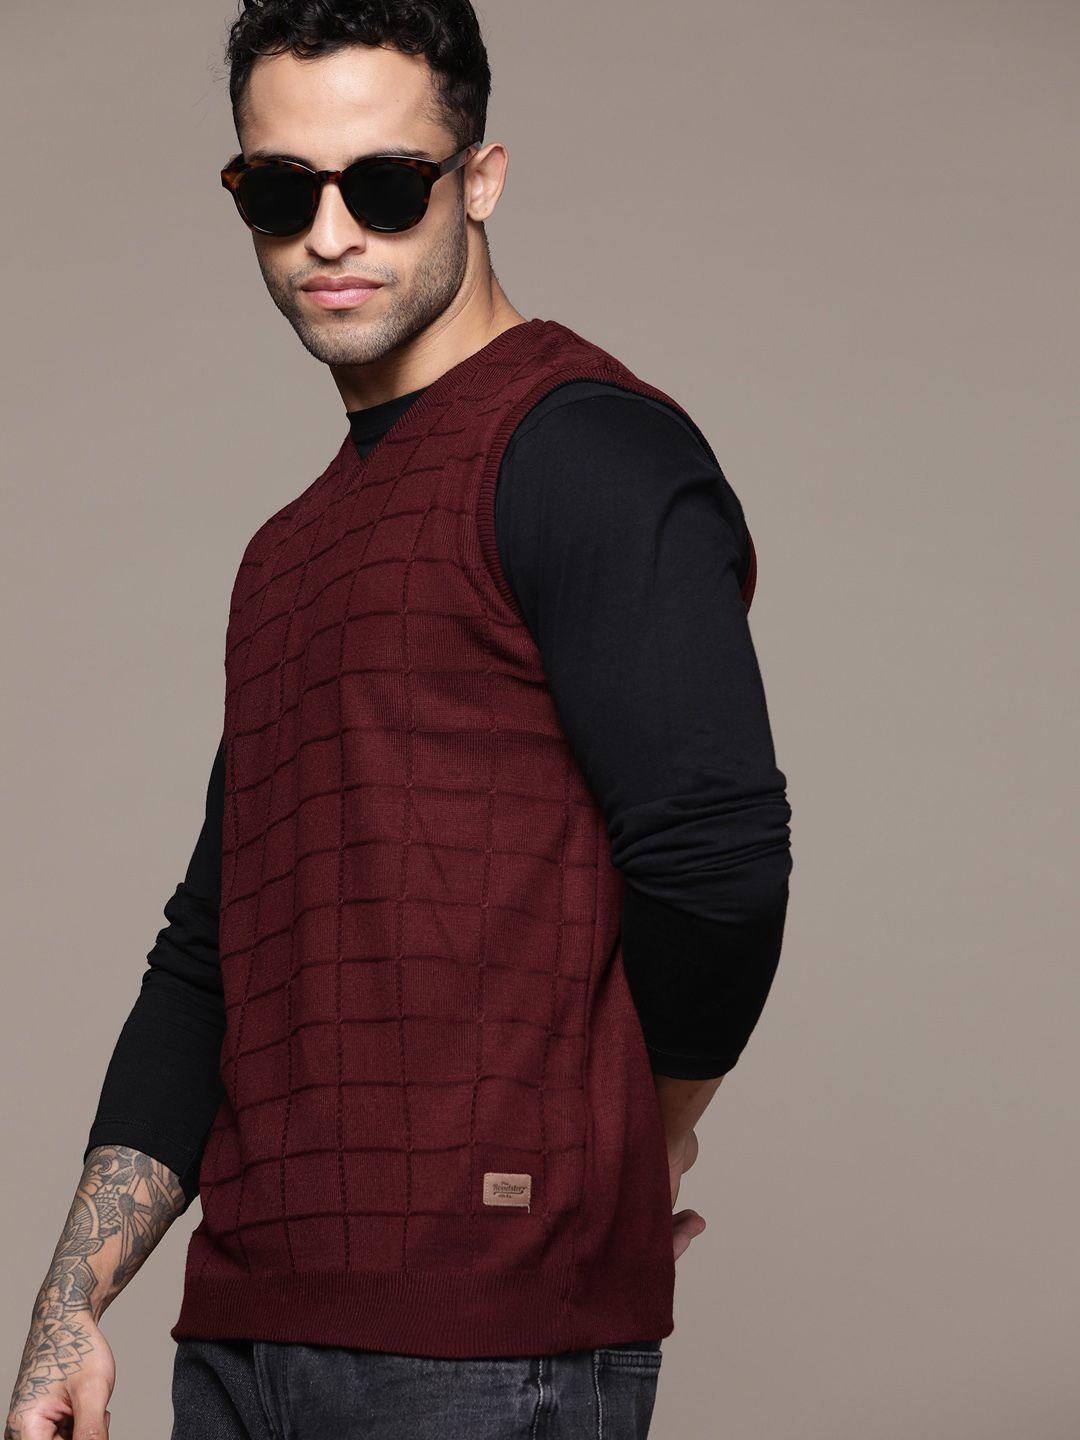 roadster men geometric design pullover sweater vest